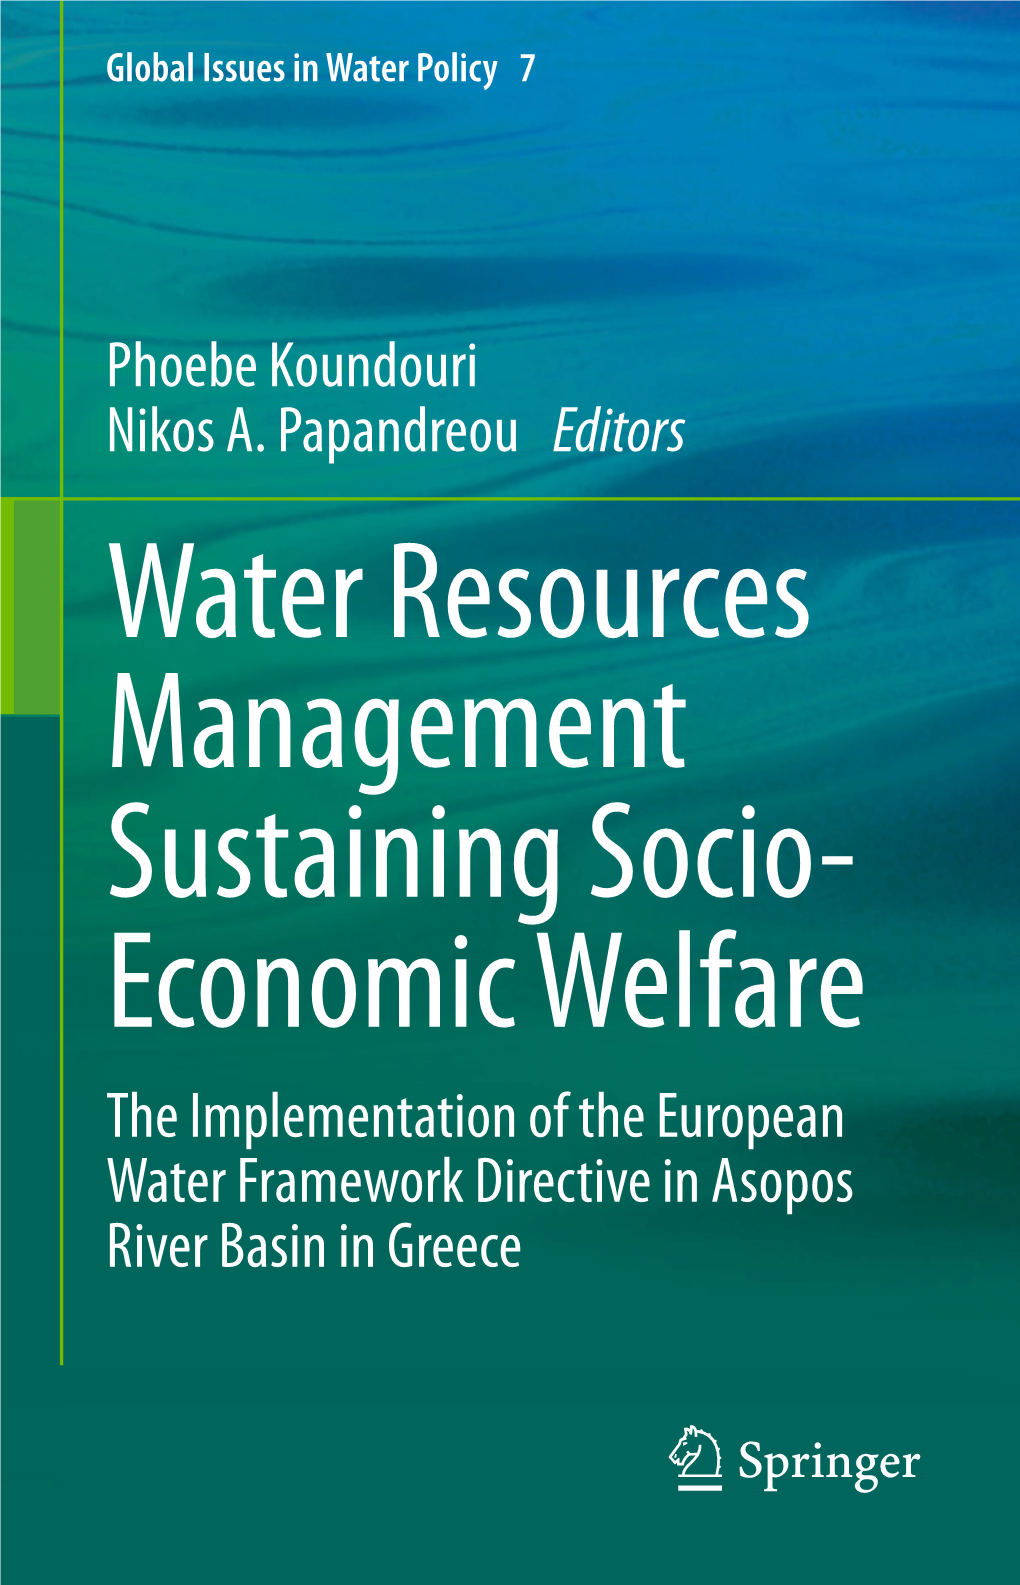 Water Resources Management Sustaining Socio- Economic Welfare